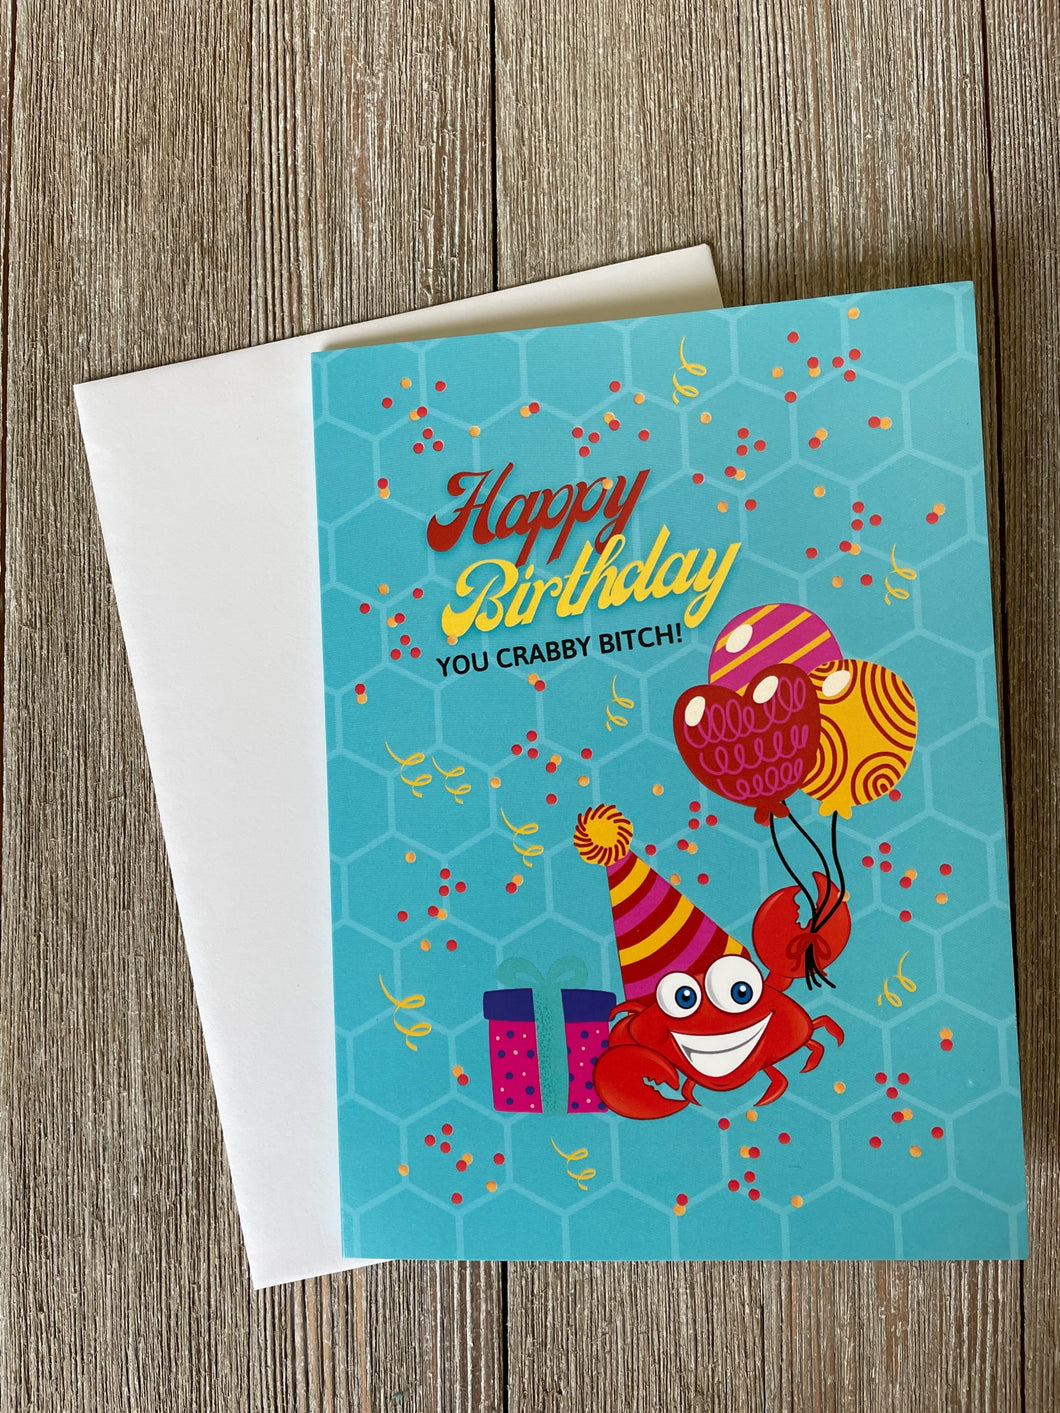 Happy Birthday You Crabby Bitch Card - Funny Crab Birthday Card